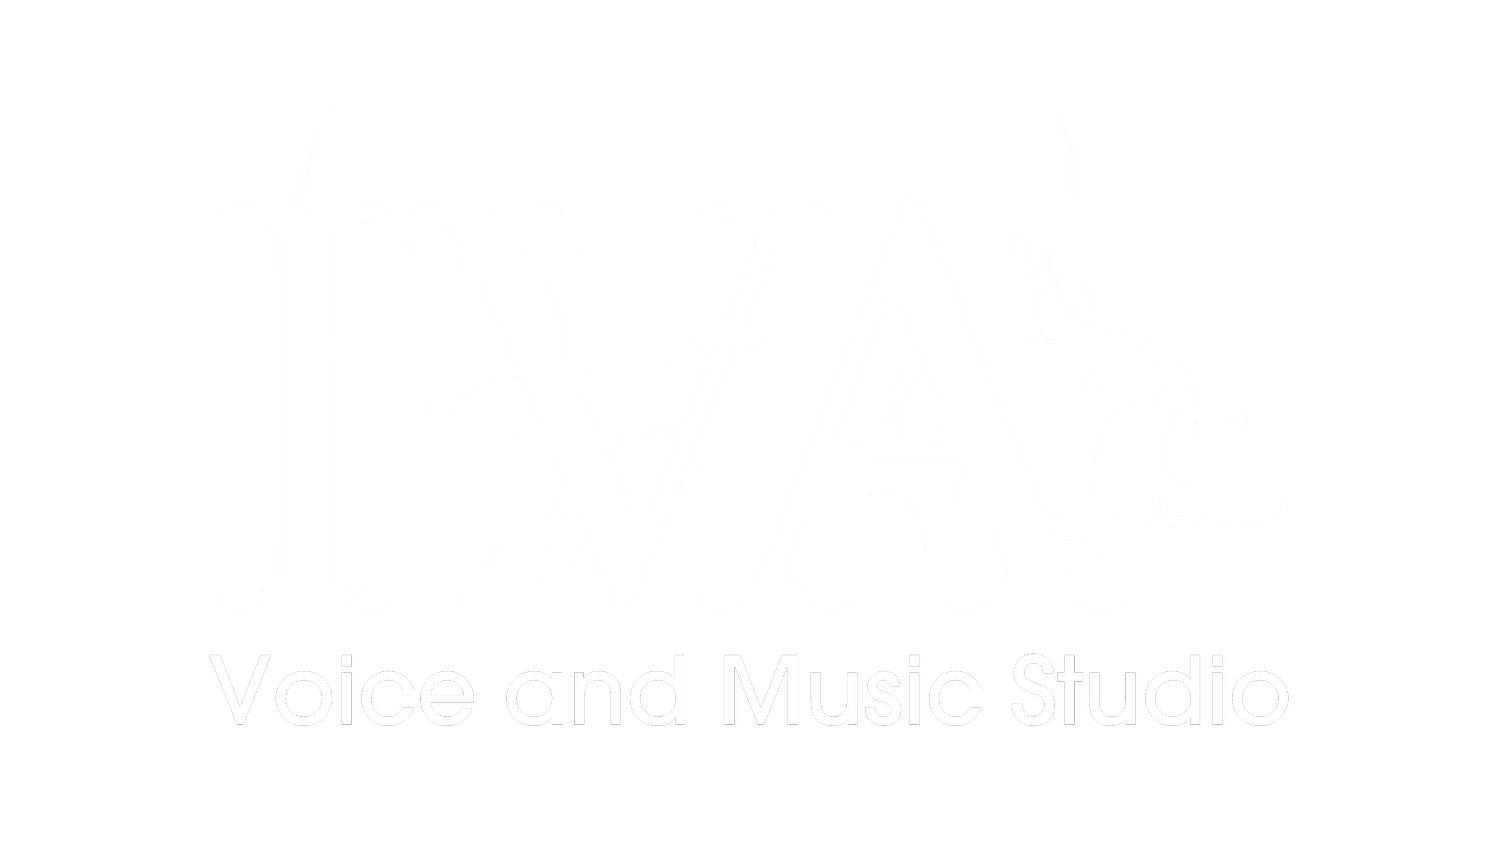 IVA VOICE AND MUSIC STUDIO